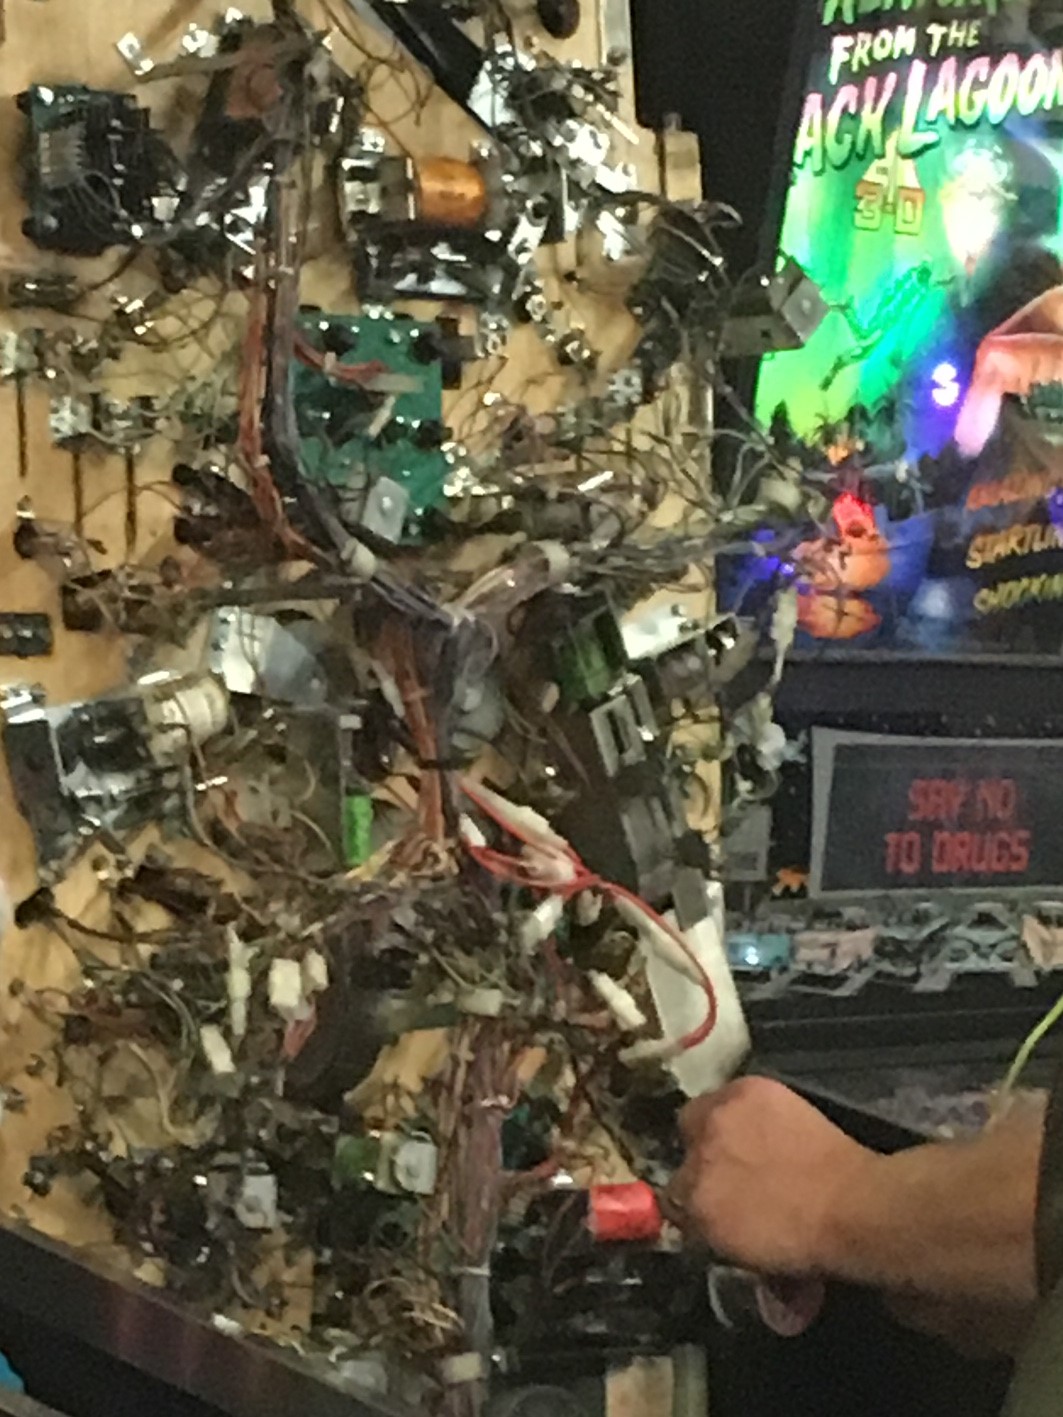 Old-school mechanics of a pinball machine